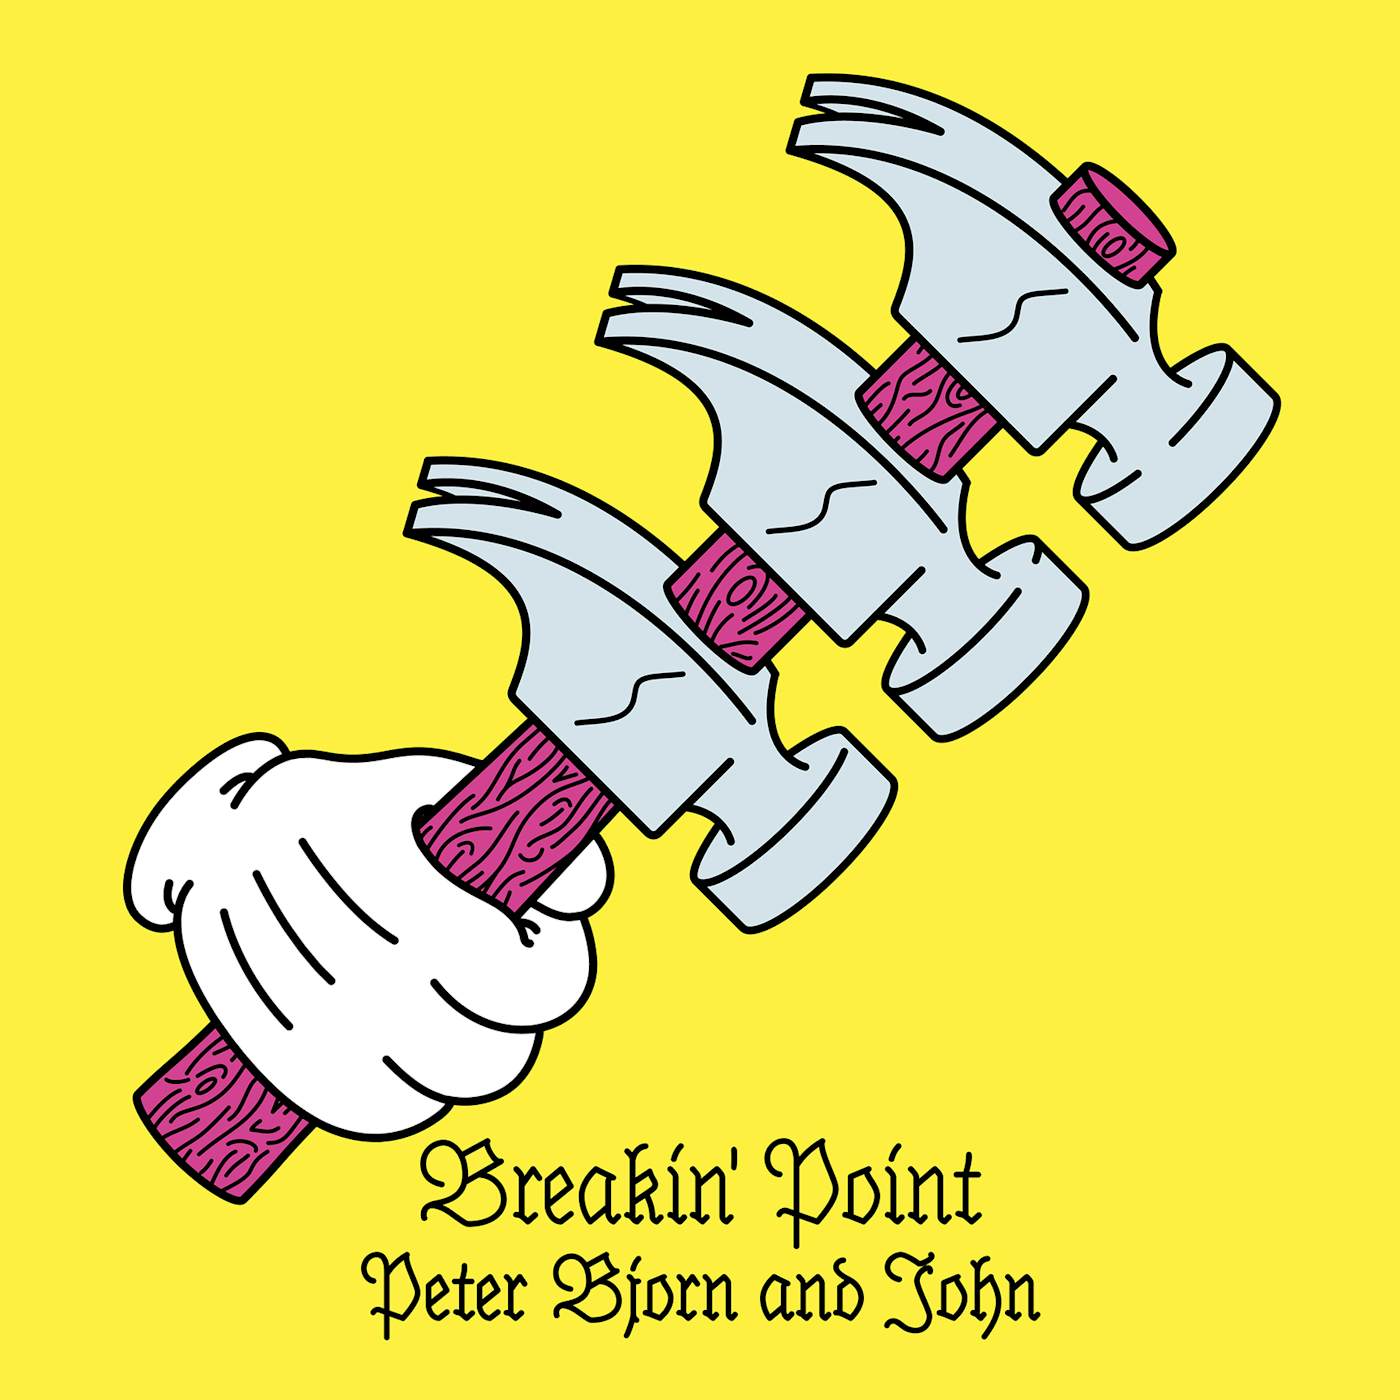 Peter Bjorn and John BREAKIN' POINT CD